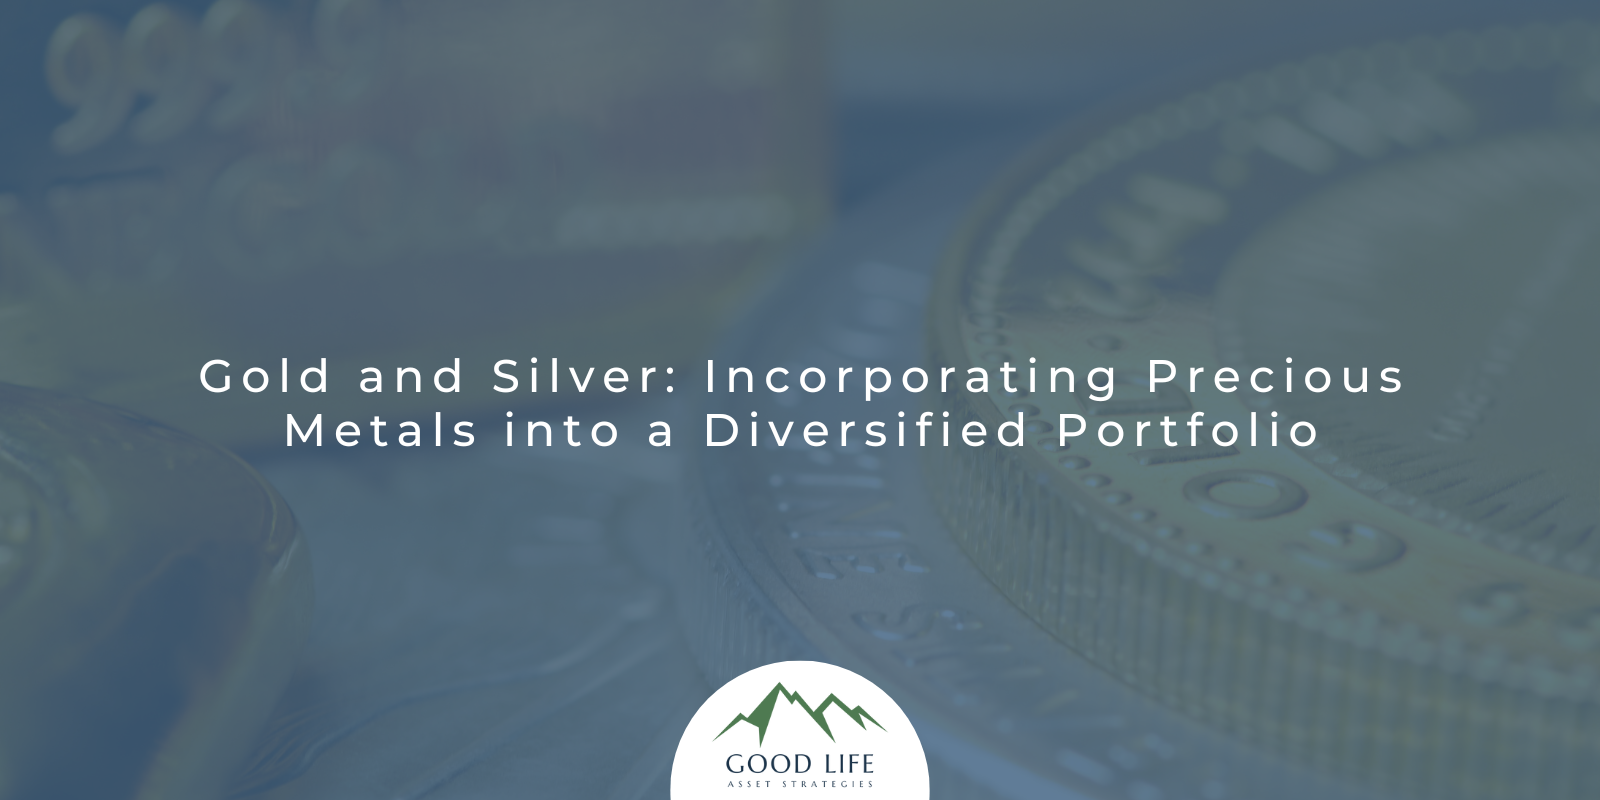 Gold and Silver: Incorporating Precious Metals into a Diversified Portfolio